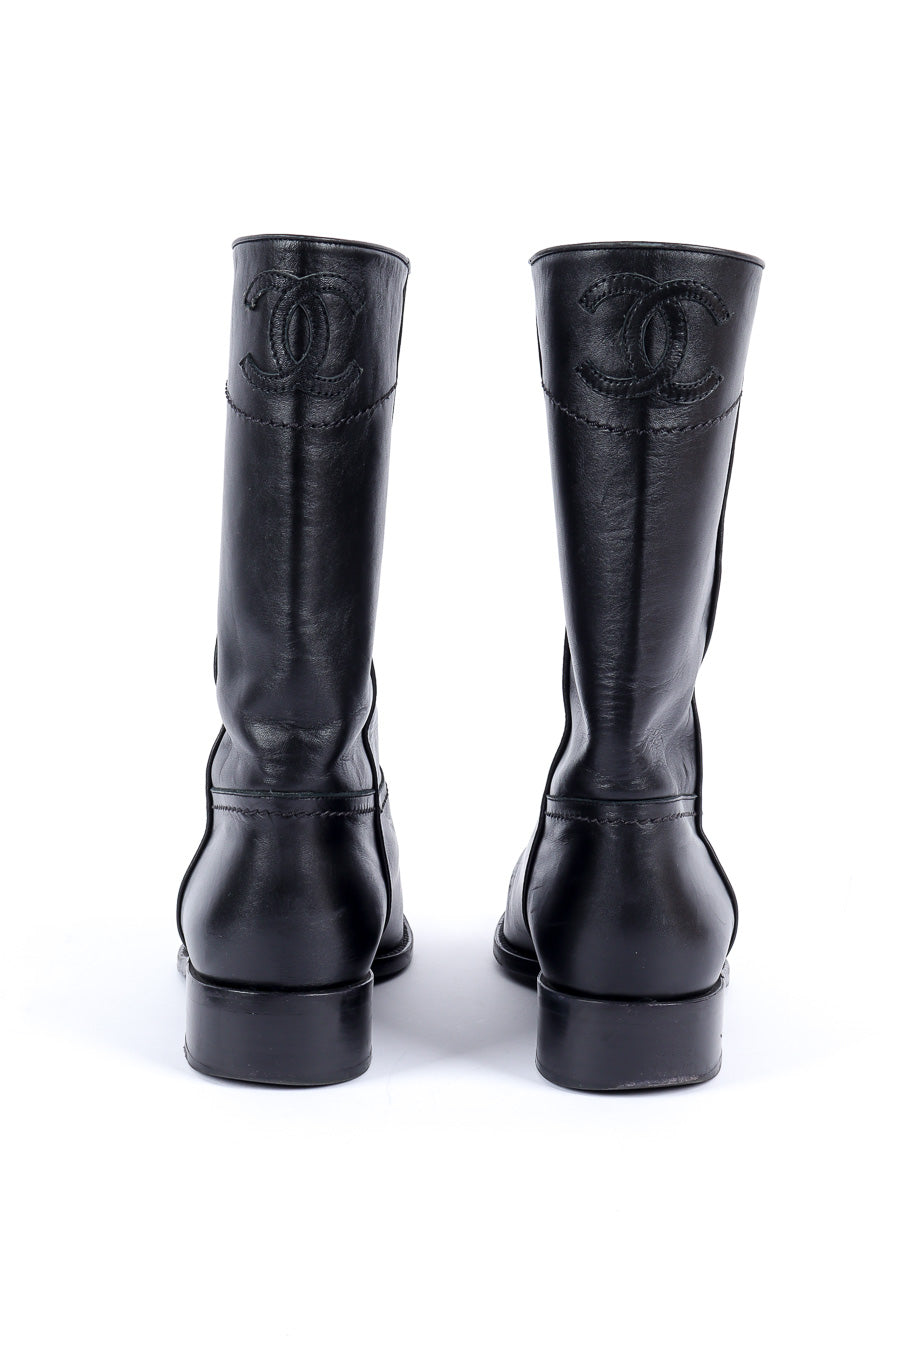 Chanel interlocking CC mid-calf boots back of boot detail @recessla